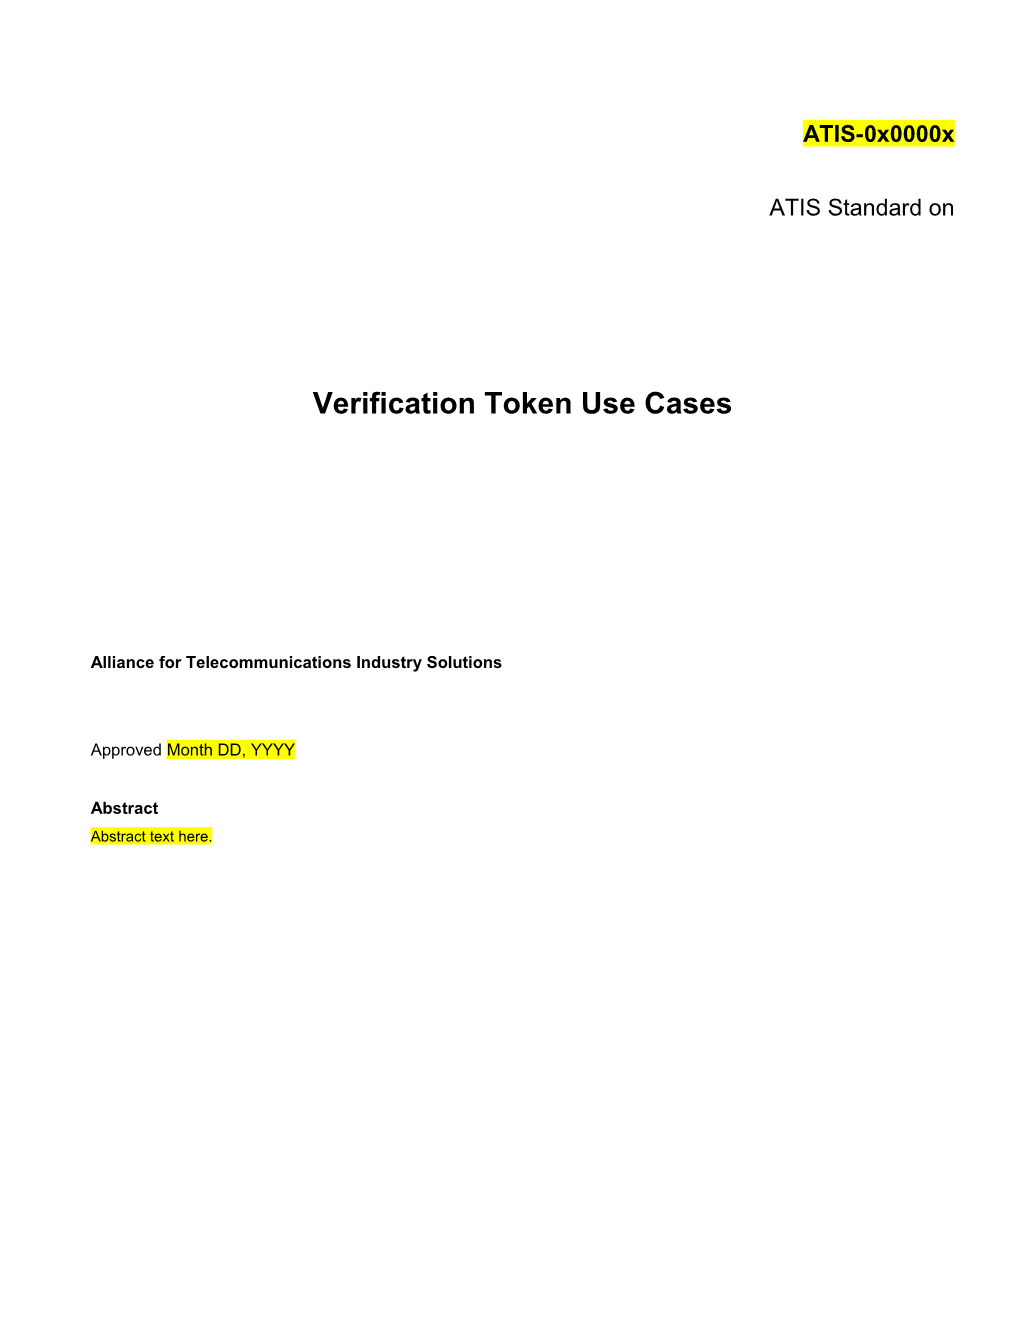 Verification Token Use Cases